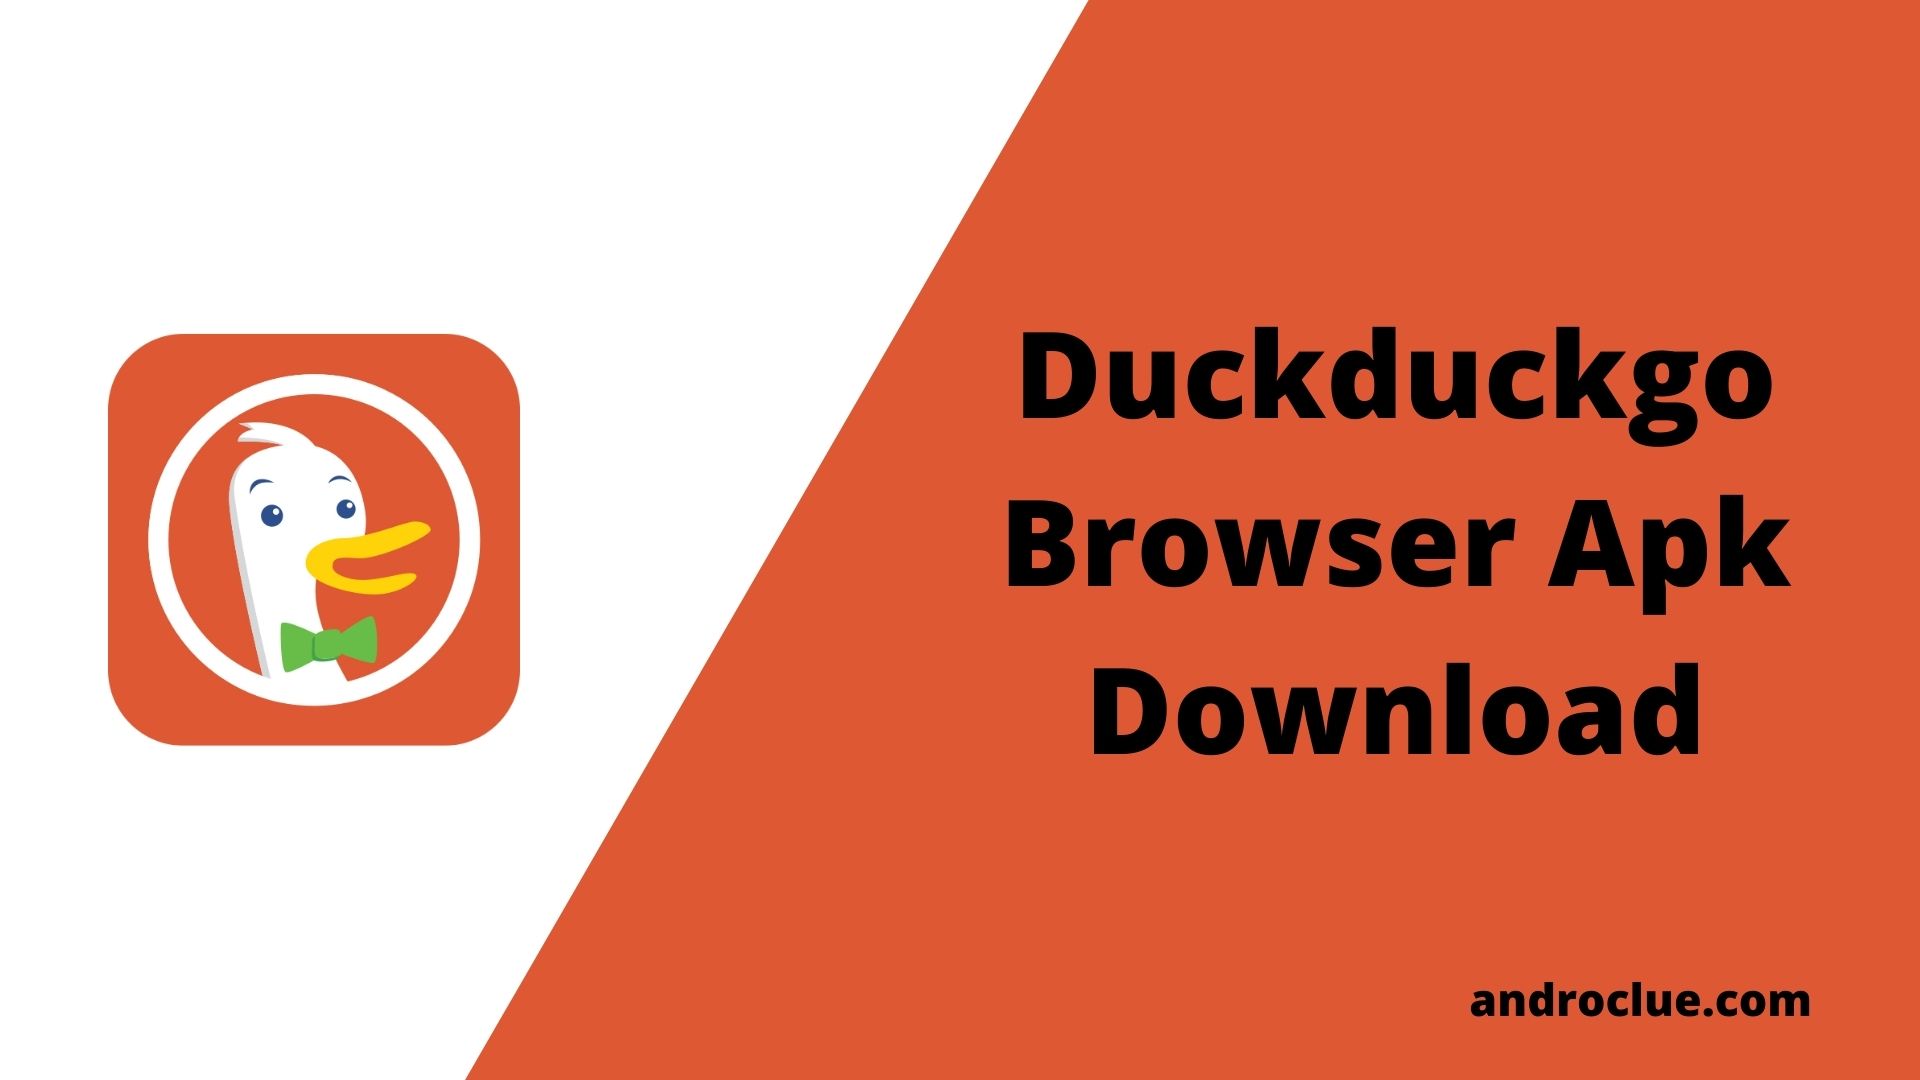 duckduckgo web browser review